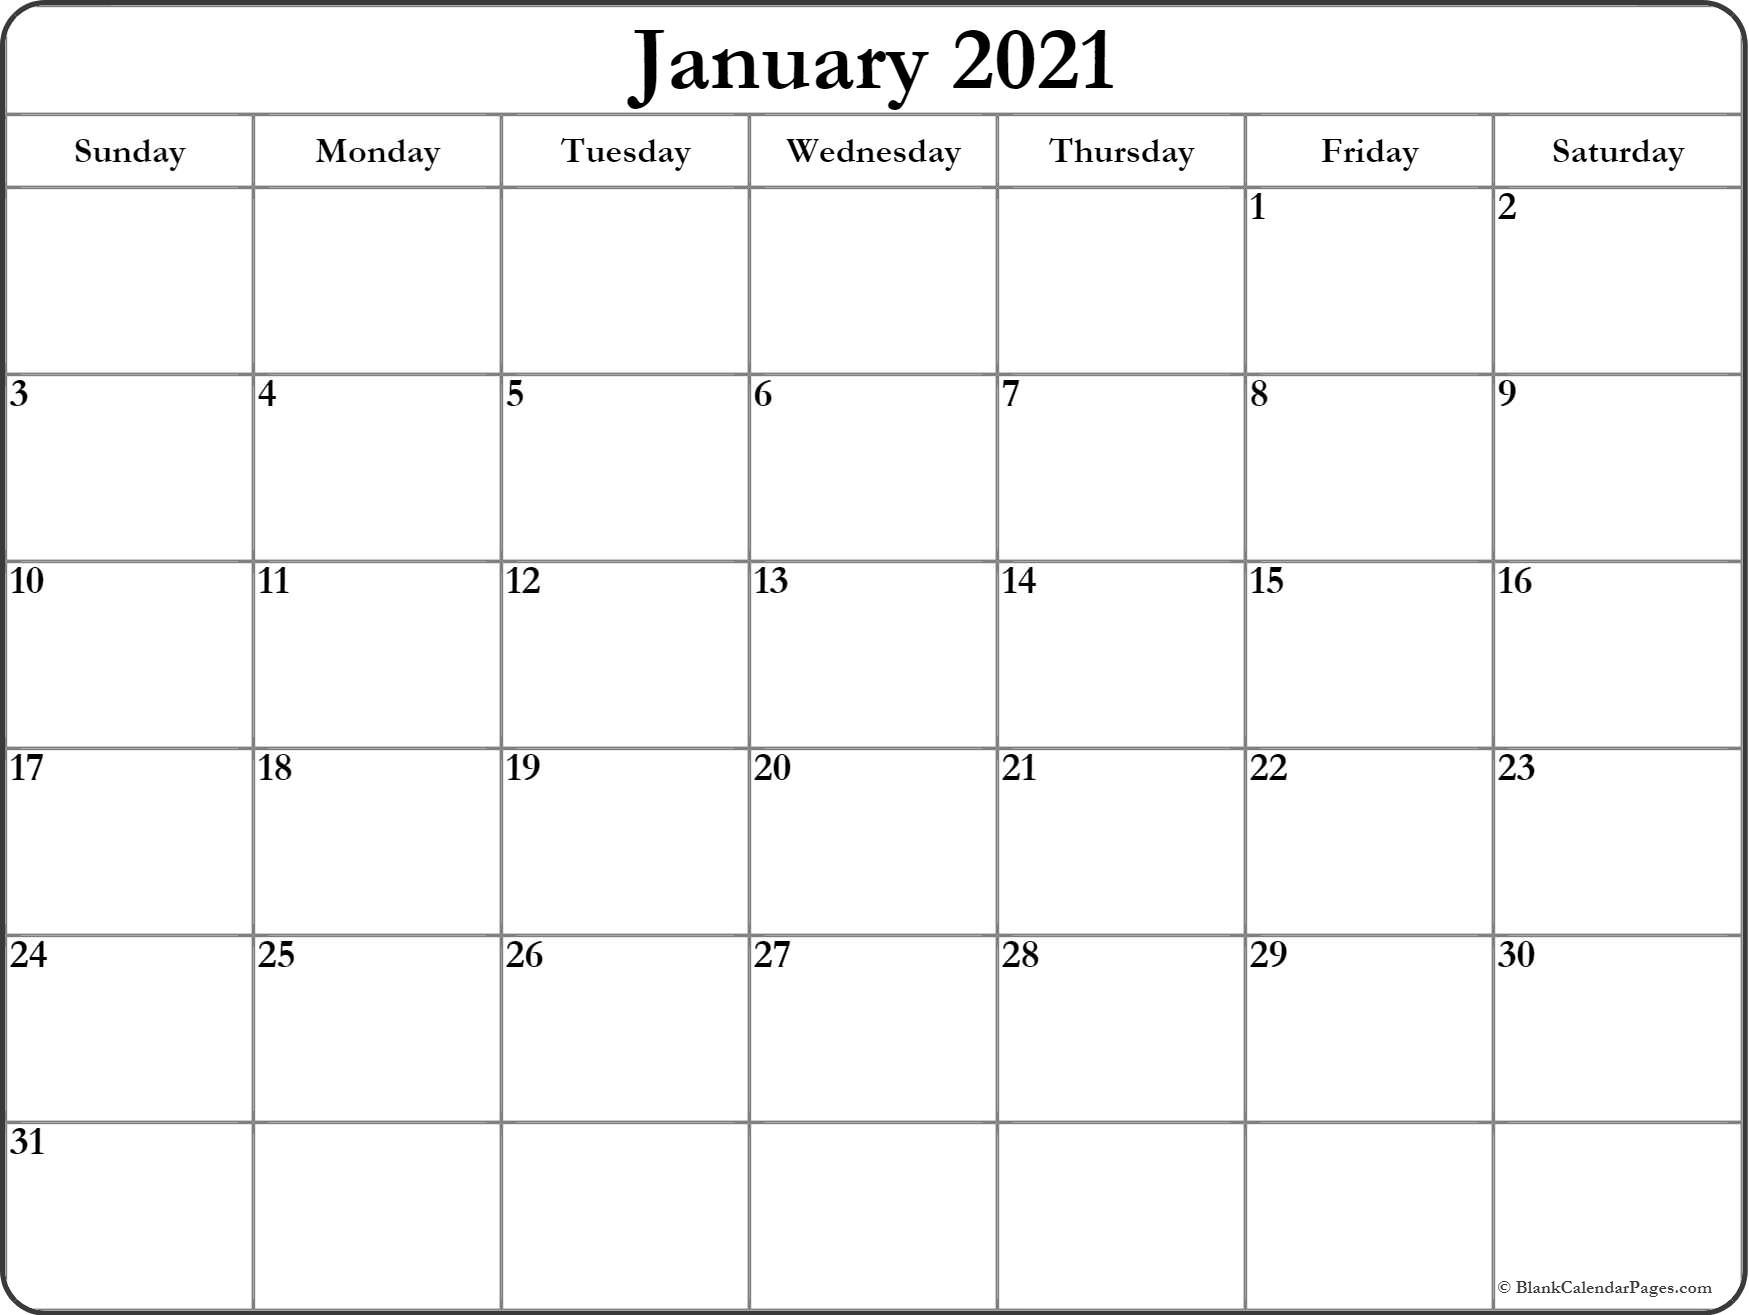 January 2021 Blank Calendar Collection 8